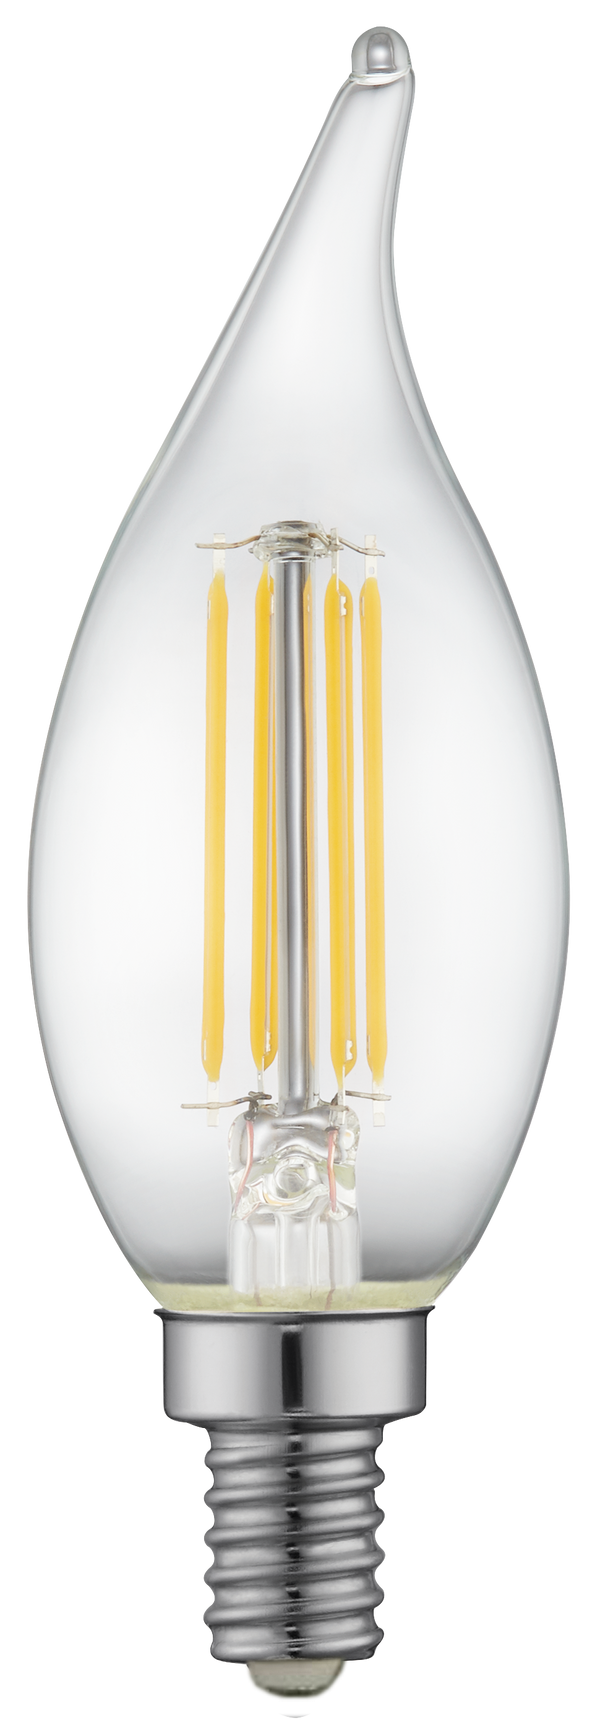 LED Filament High CRI Lamp E12 Clear Flame - 1.4", 5W, 50K